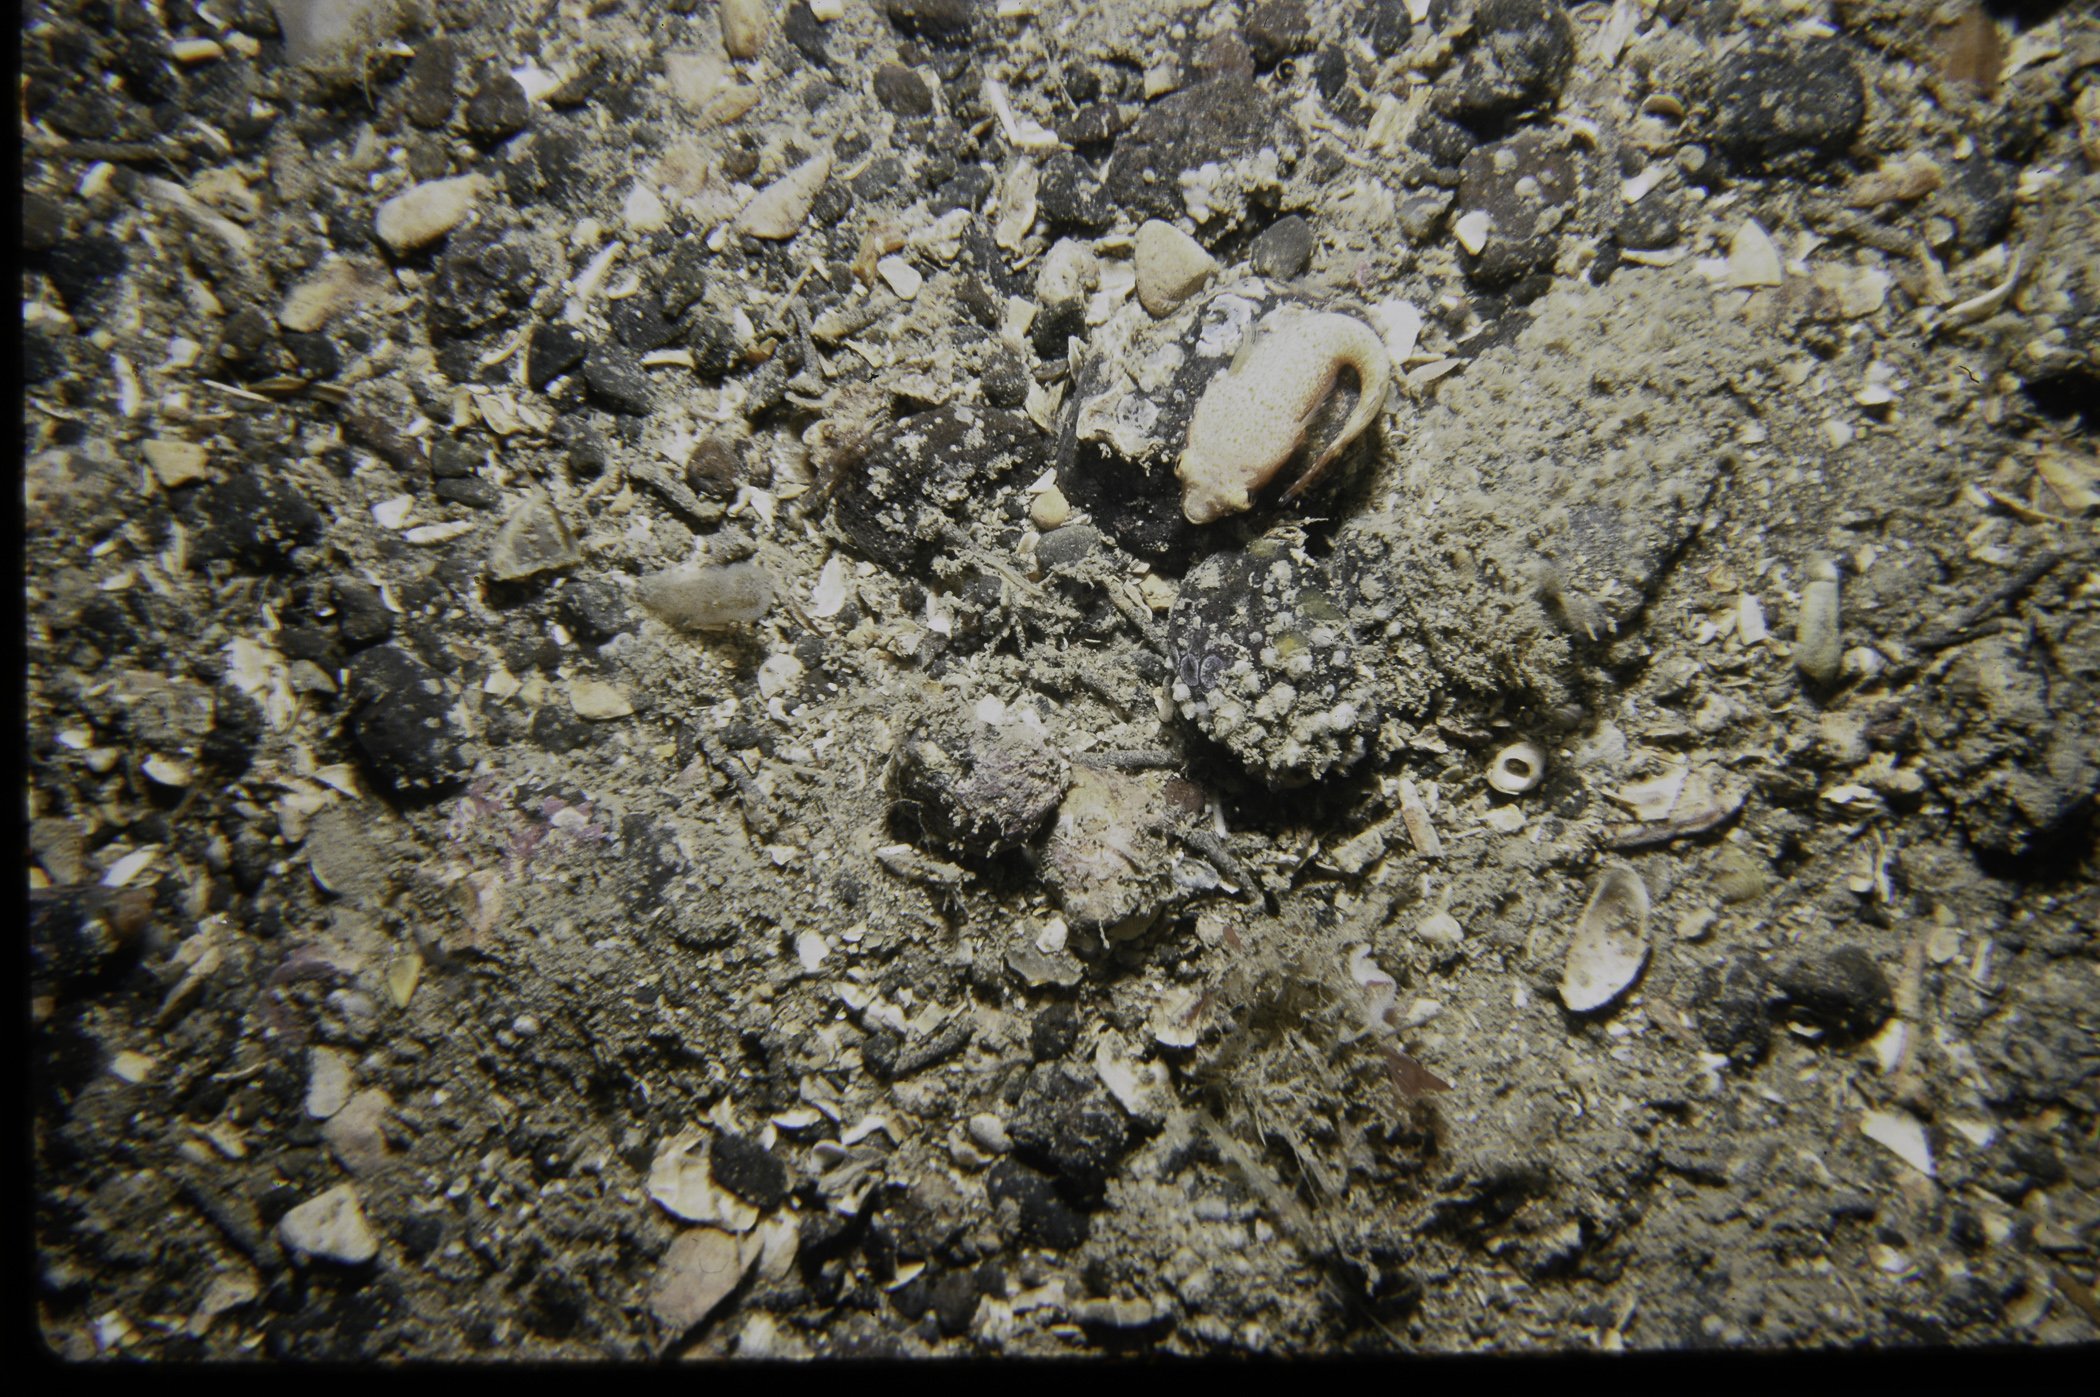 Diplecogaster bimaculata. Site: NE of White Cliffs, Port Muck. 